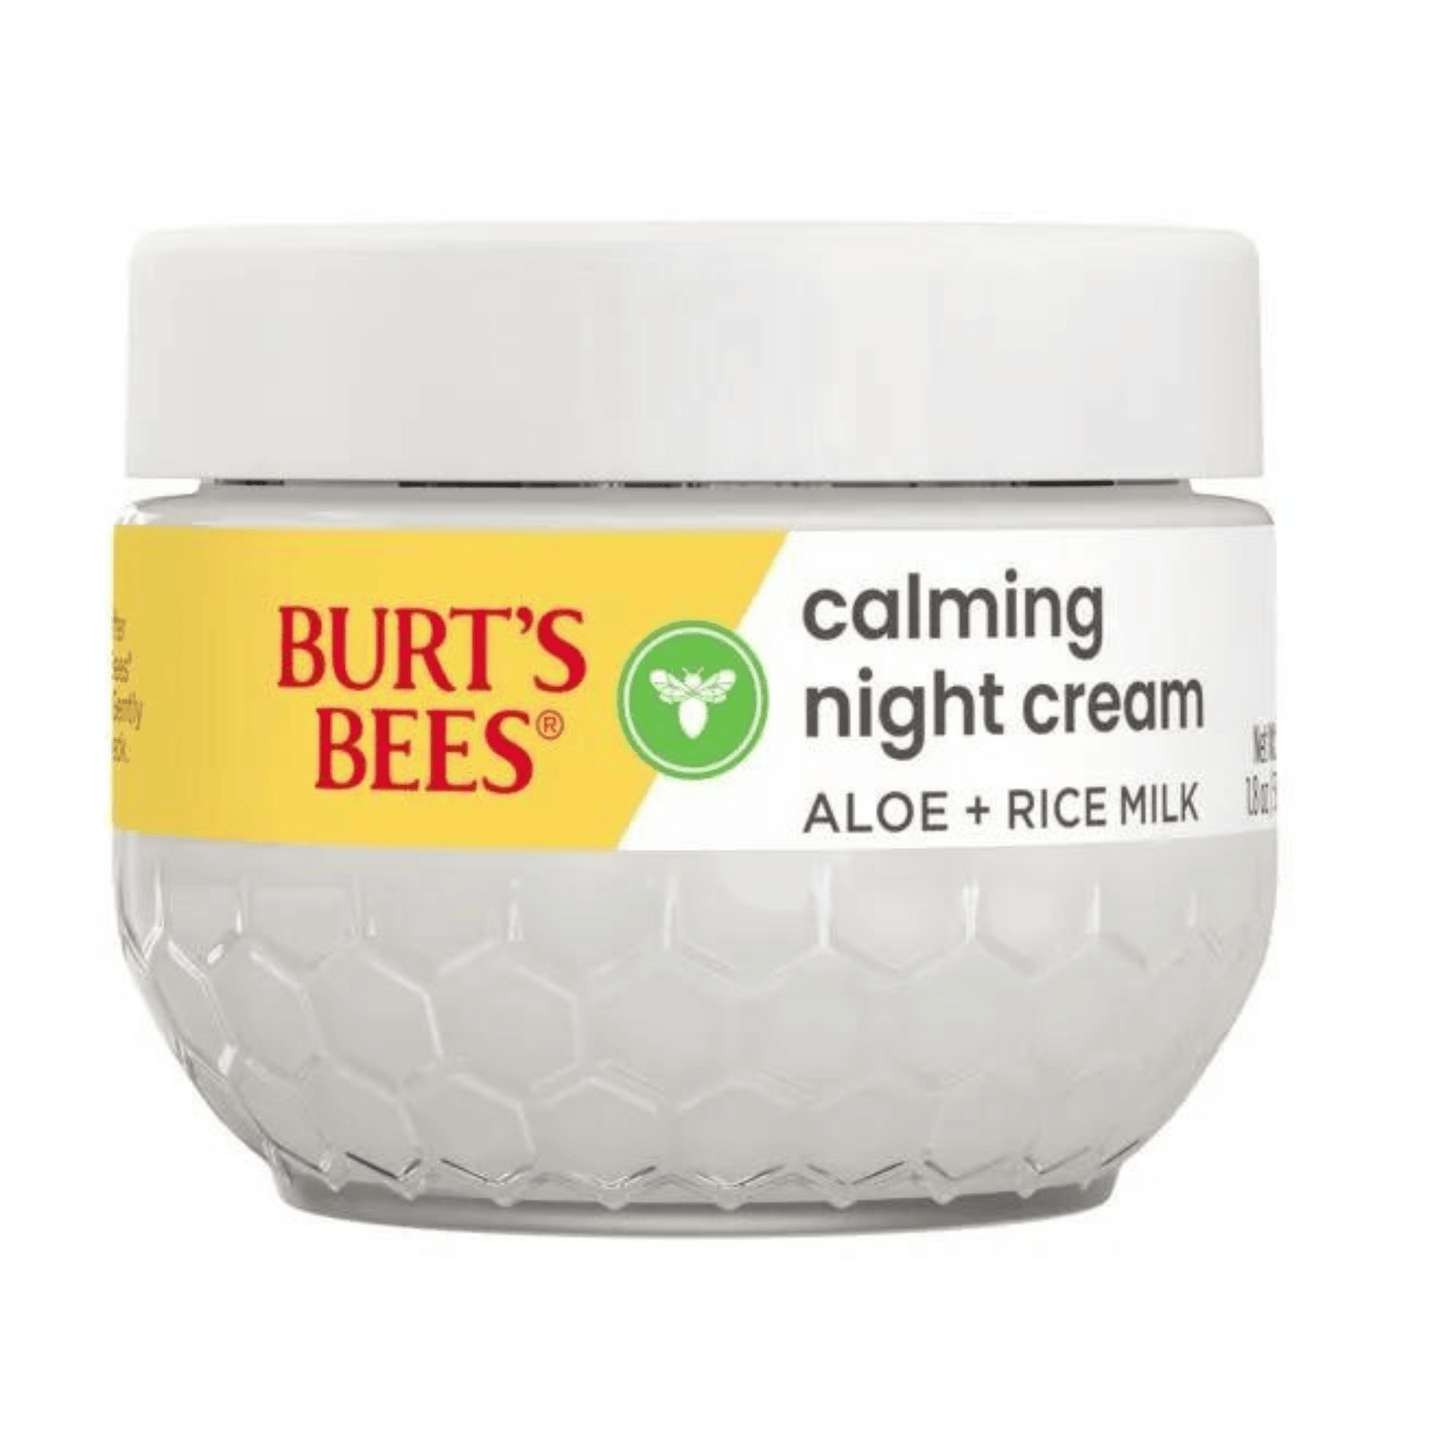 Primary Image of Sensitive Solutions Calming Night Cream